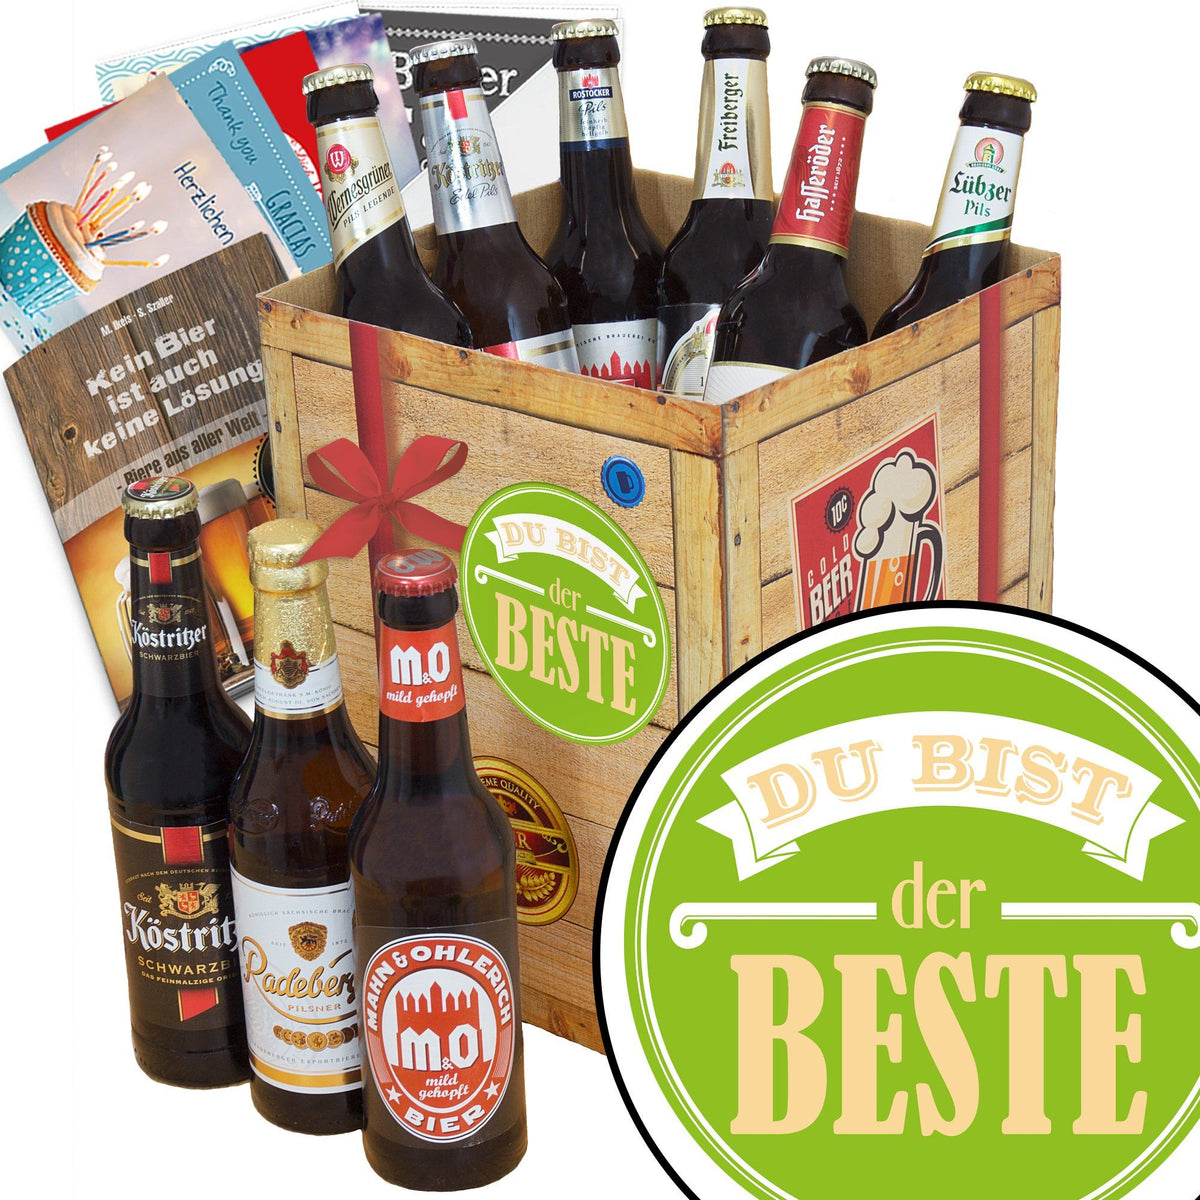 Compare prices for Skelett trinkt Bier Großes Geschenk across all